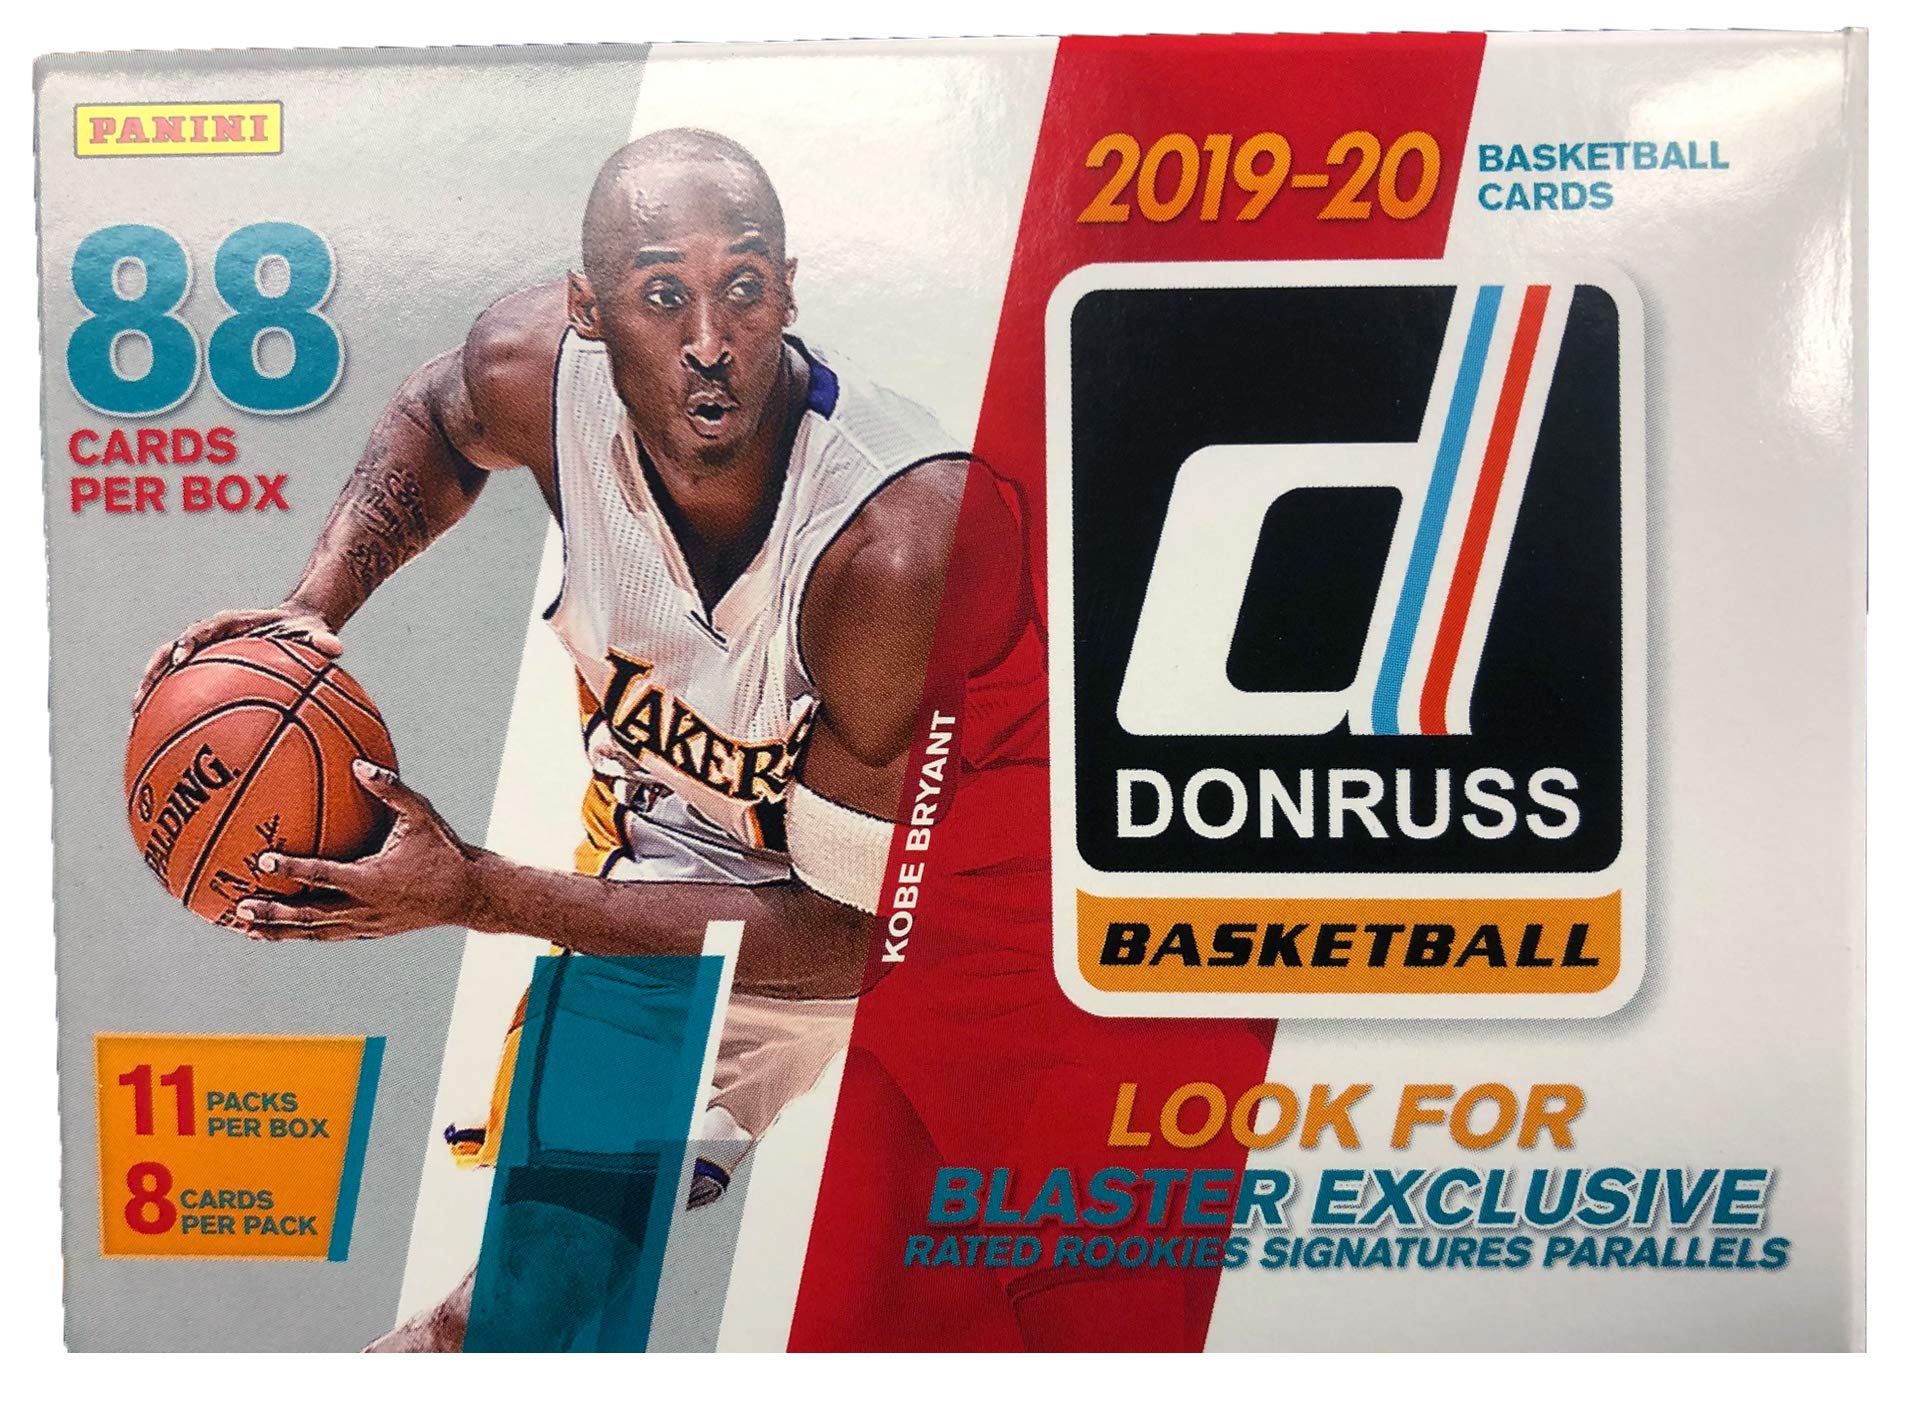 2019/2020 Panini NBA Donruss Basketball Blaster Box 1 Autograph or Memorabilia Card per Box